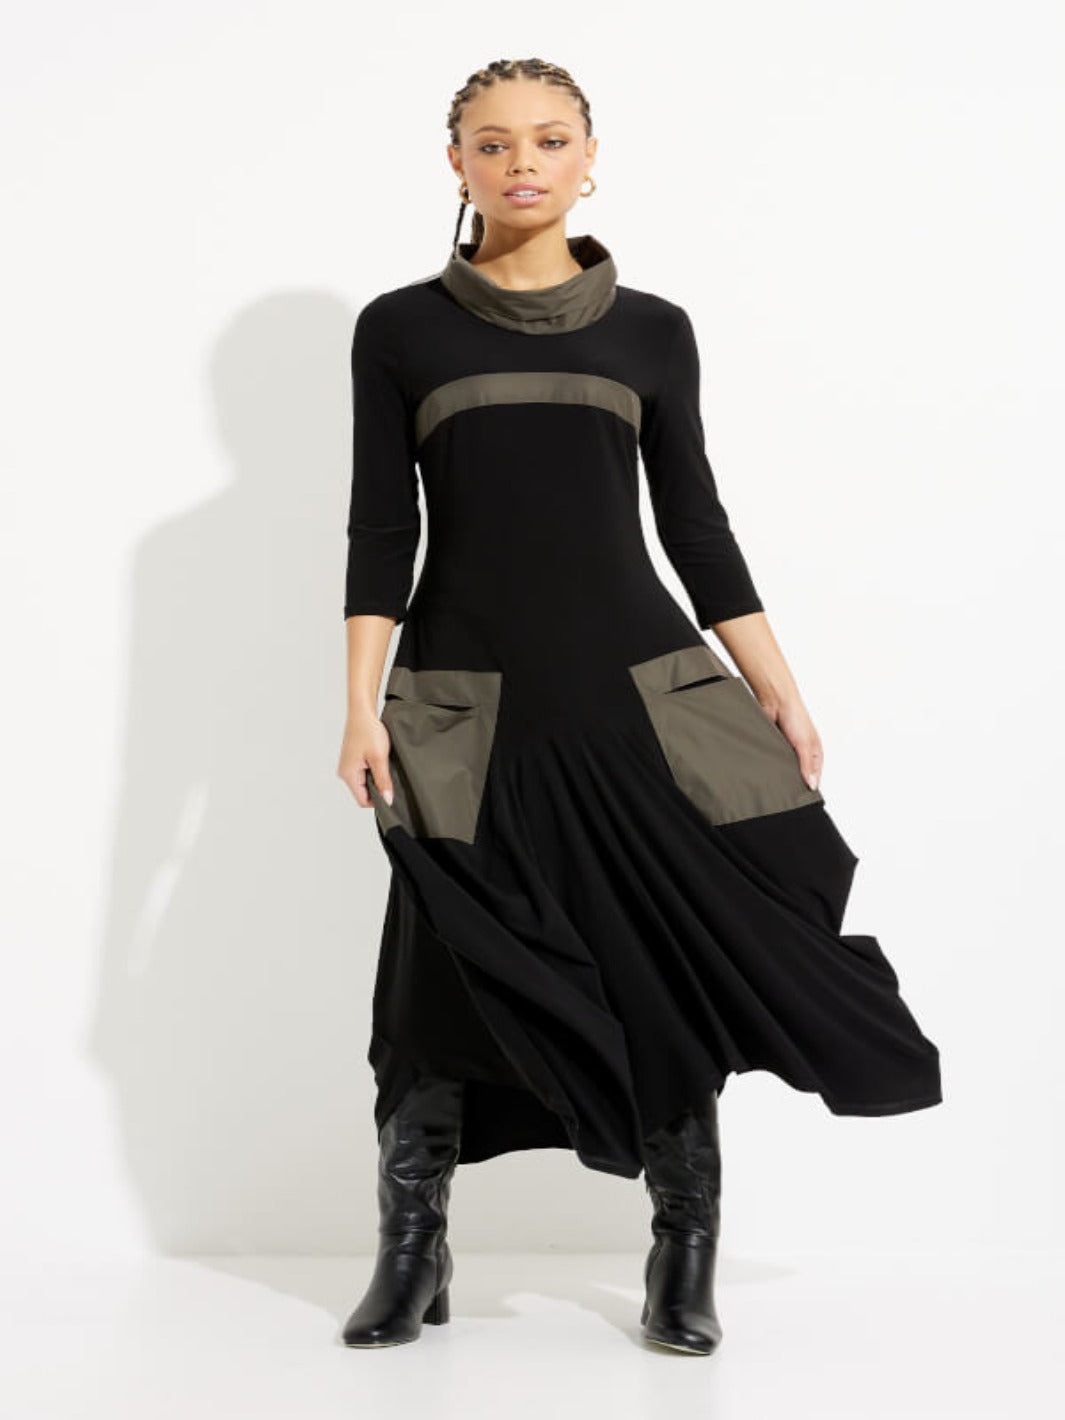 Joseph Ribkoff - Pocket Detail Dress in Khaki/Black 233110-Nicola Ross